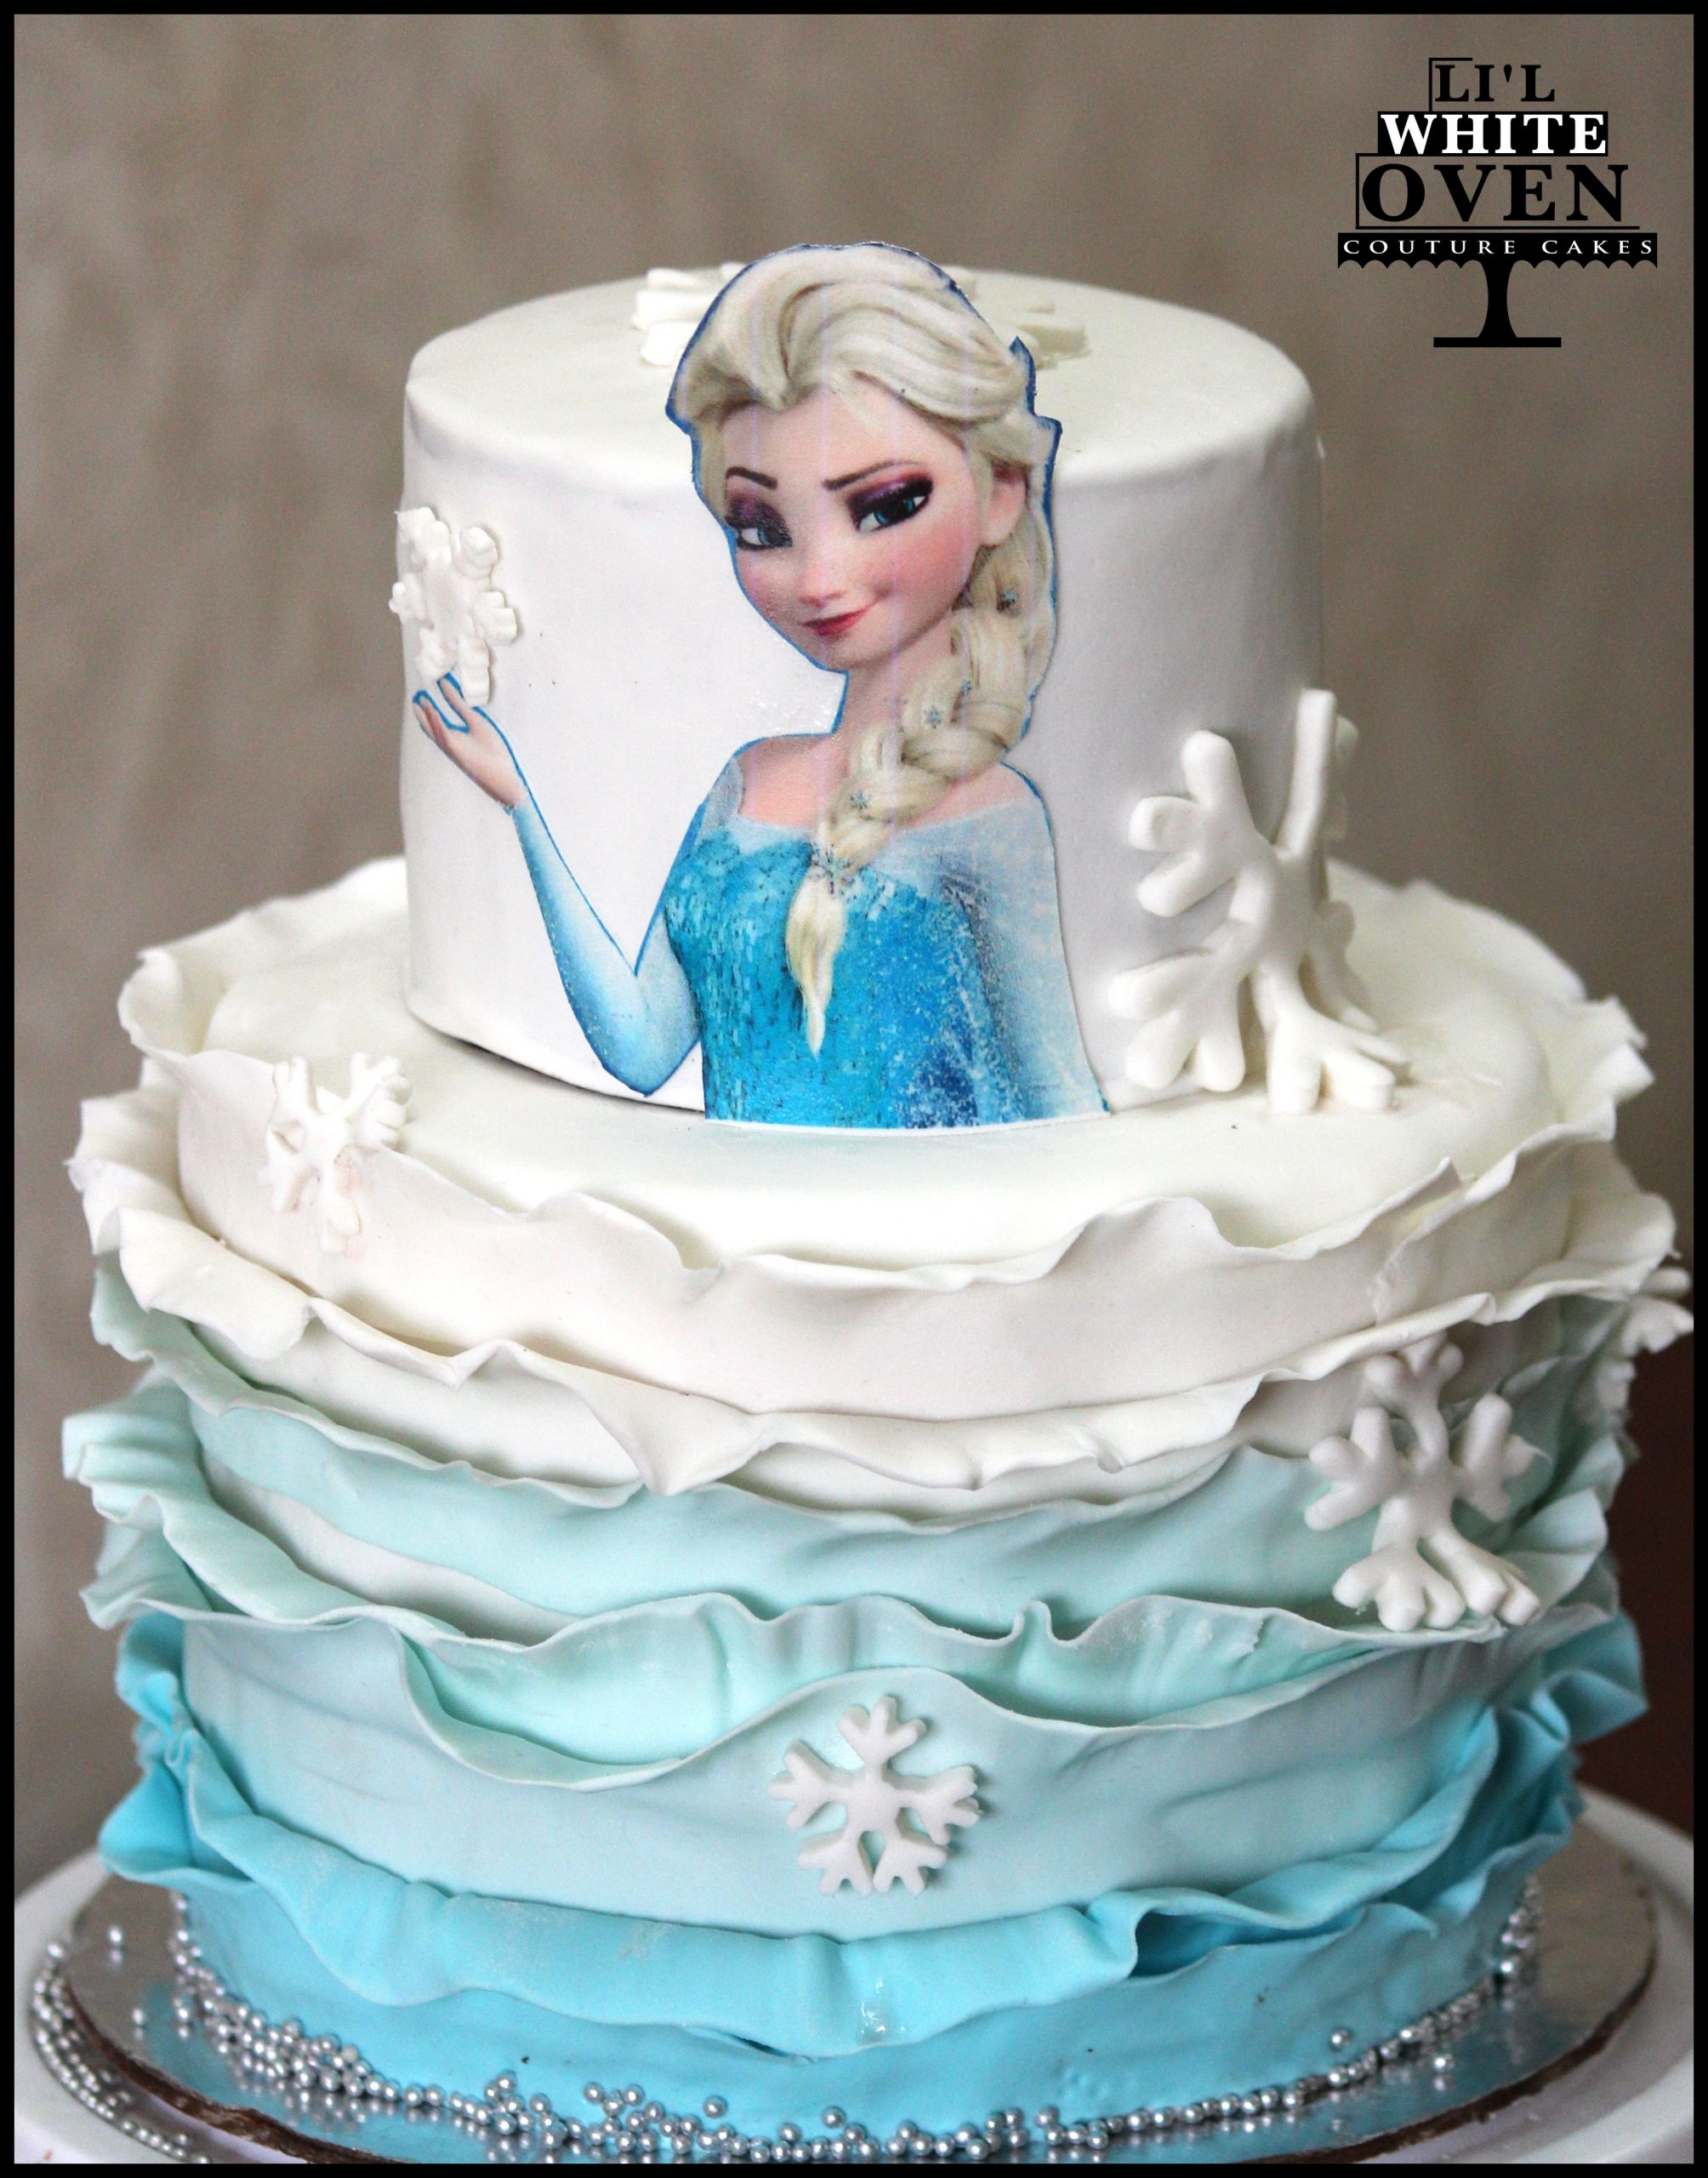 Frozen Themed Birthday Cake
 Birthday Cakes in Mumbai – Li l White Oven